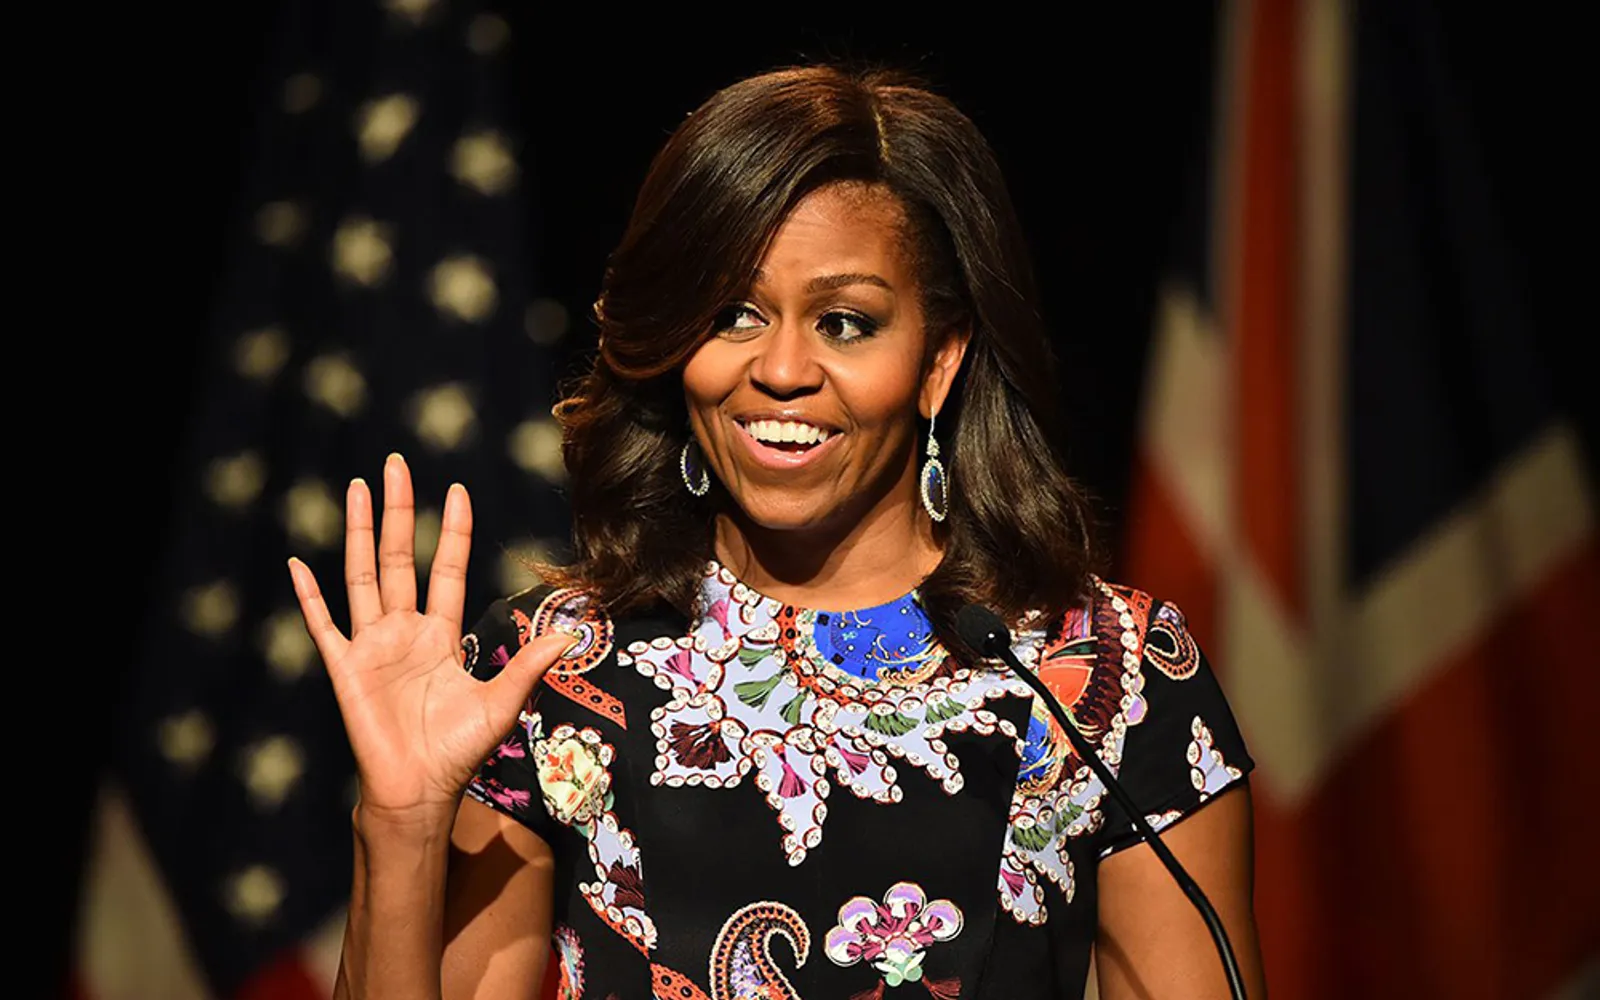 Ini 11 Alasan Kuat Kenapa Netizen Amerika Meminta Michelle Obama Untuk Jadi Presiden USA 2020 